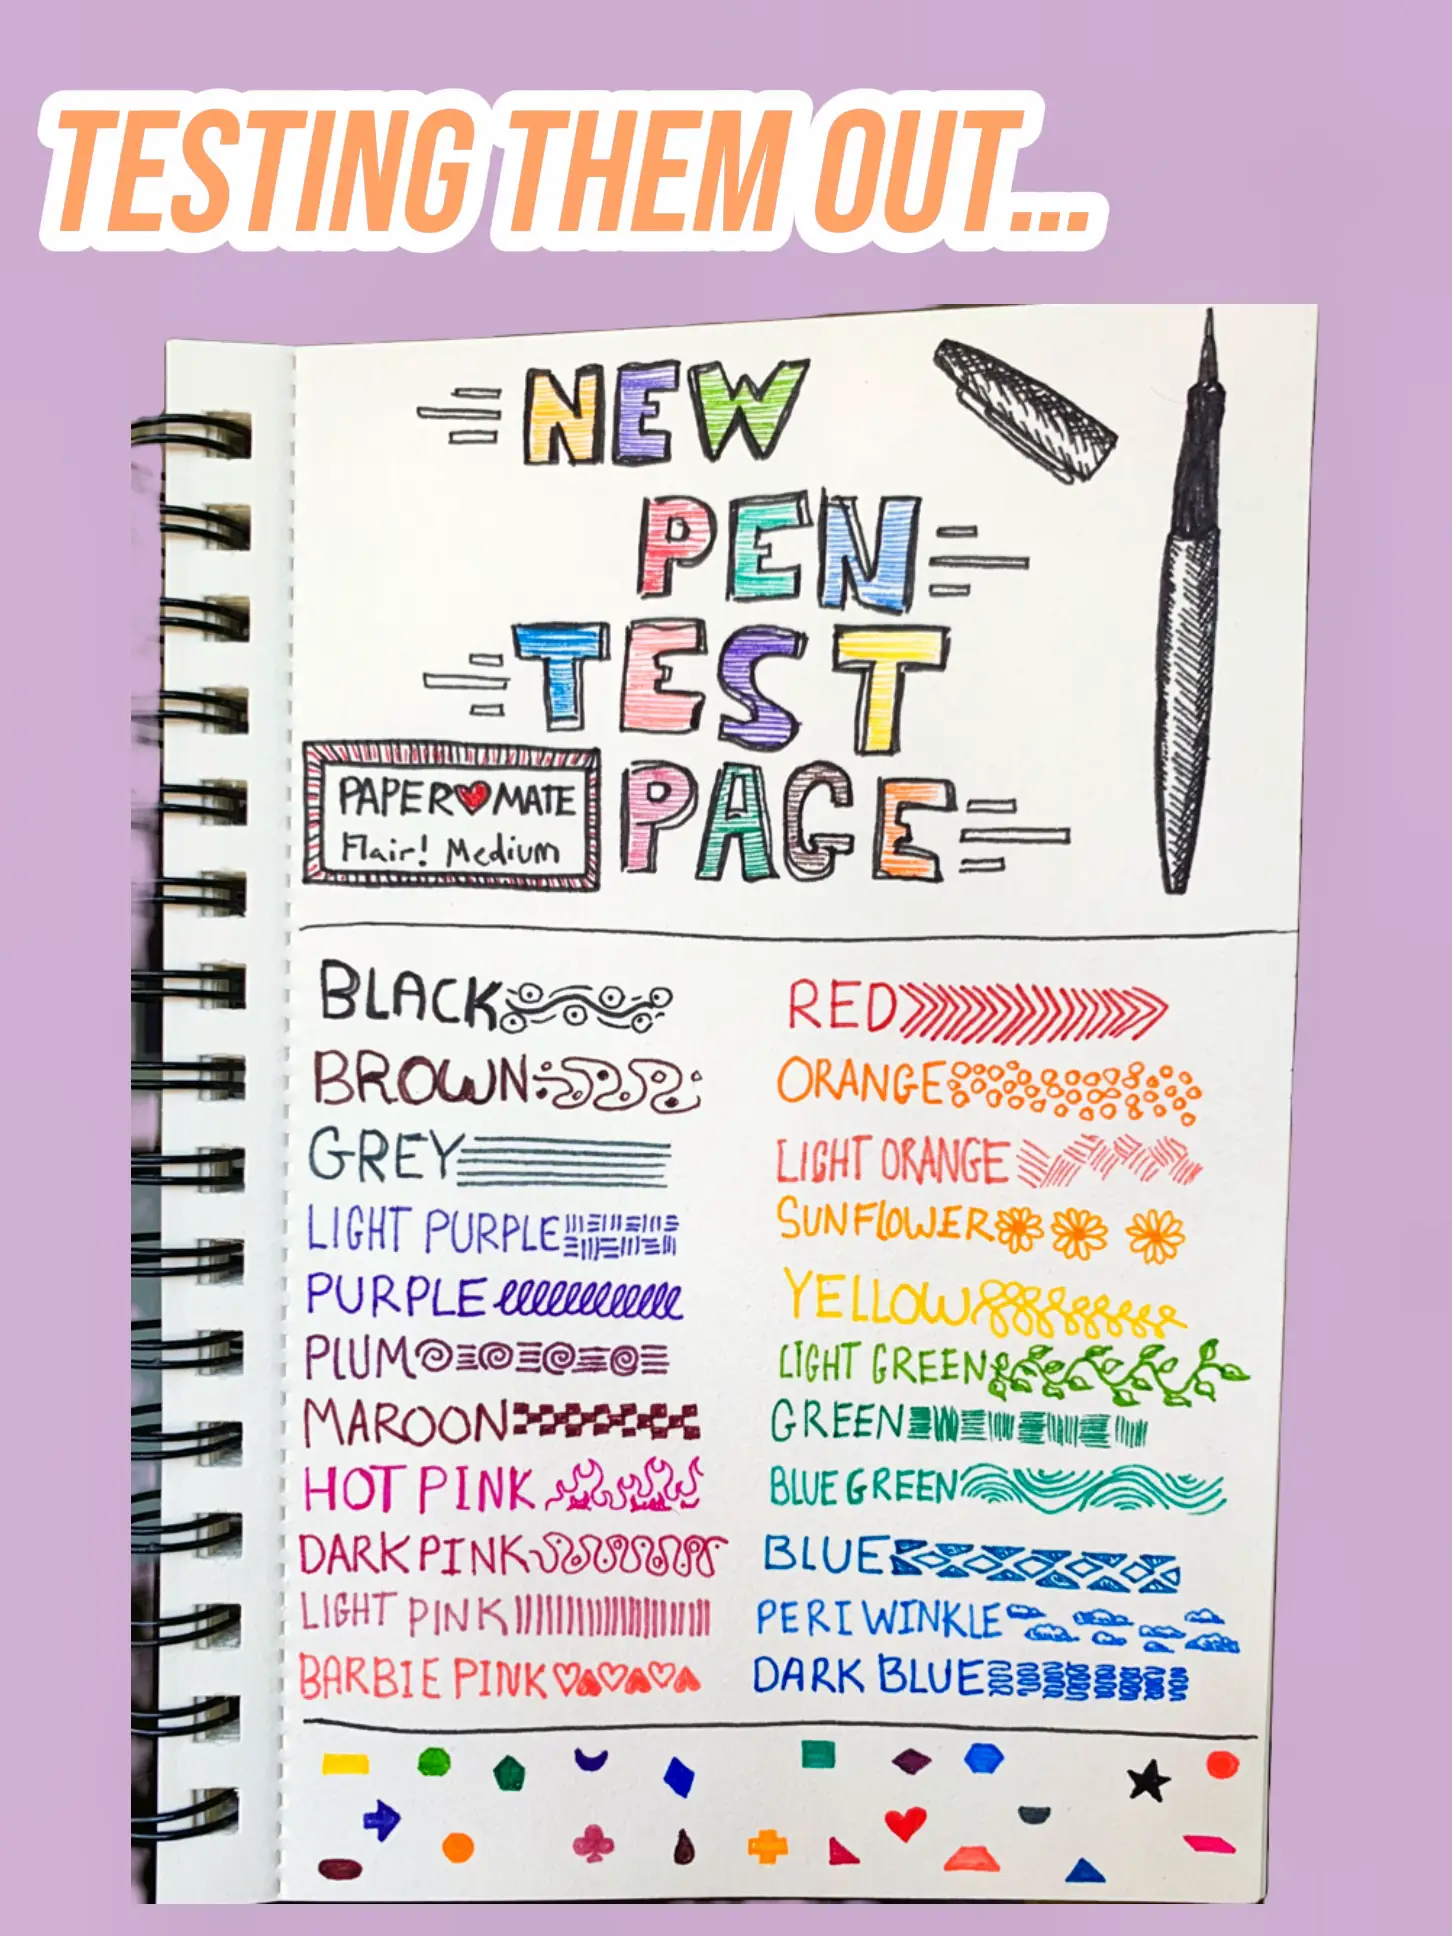 Yogurt Color Journal Planner Pens Colorful 0.5mm Markers Fine Tip Drawing Pens Porous Fineliner Pen for Bullet Journaling Writing Note Taking